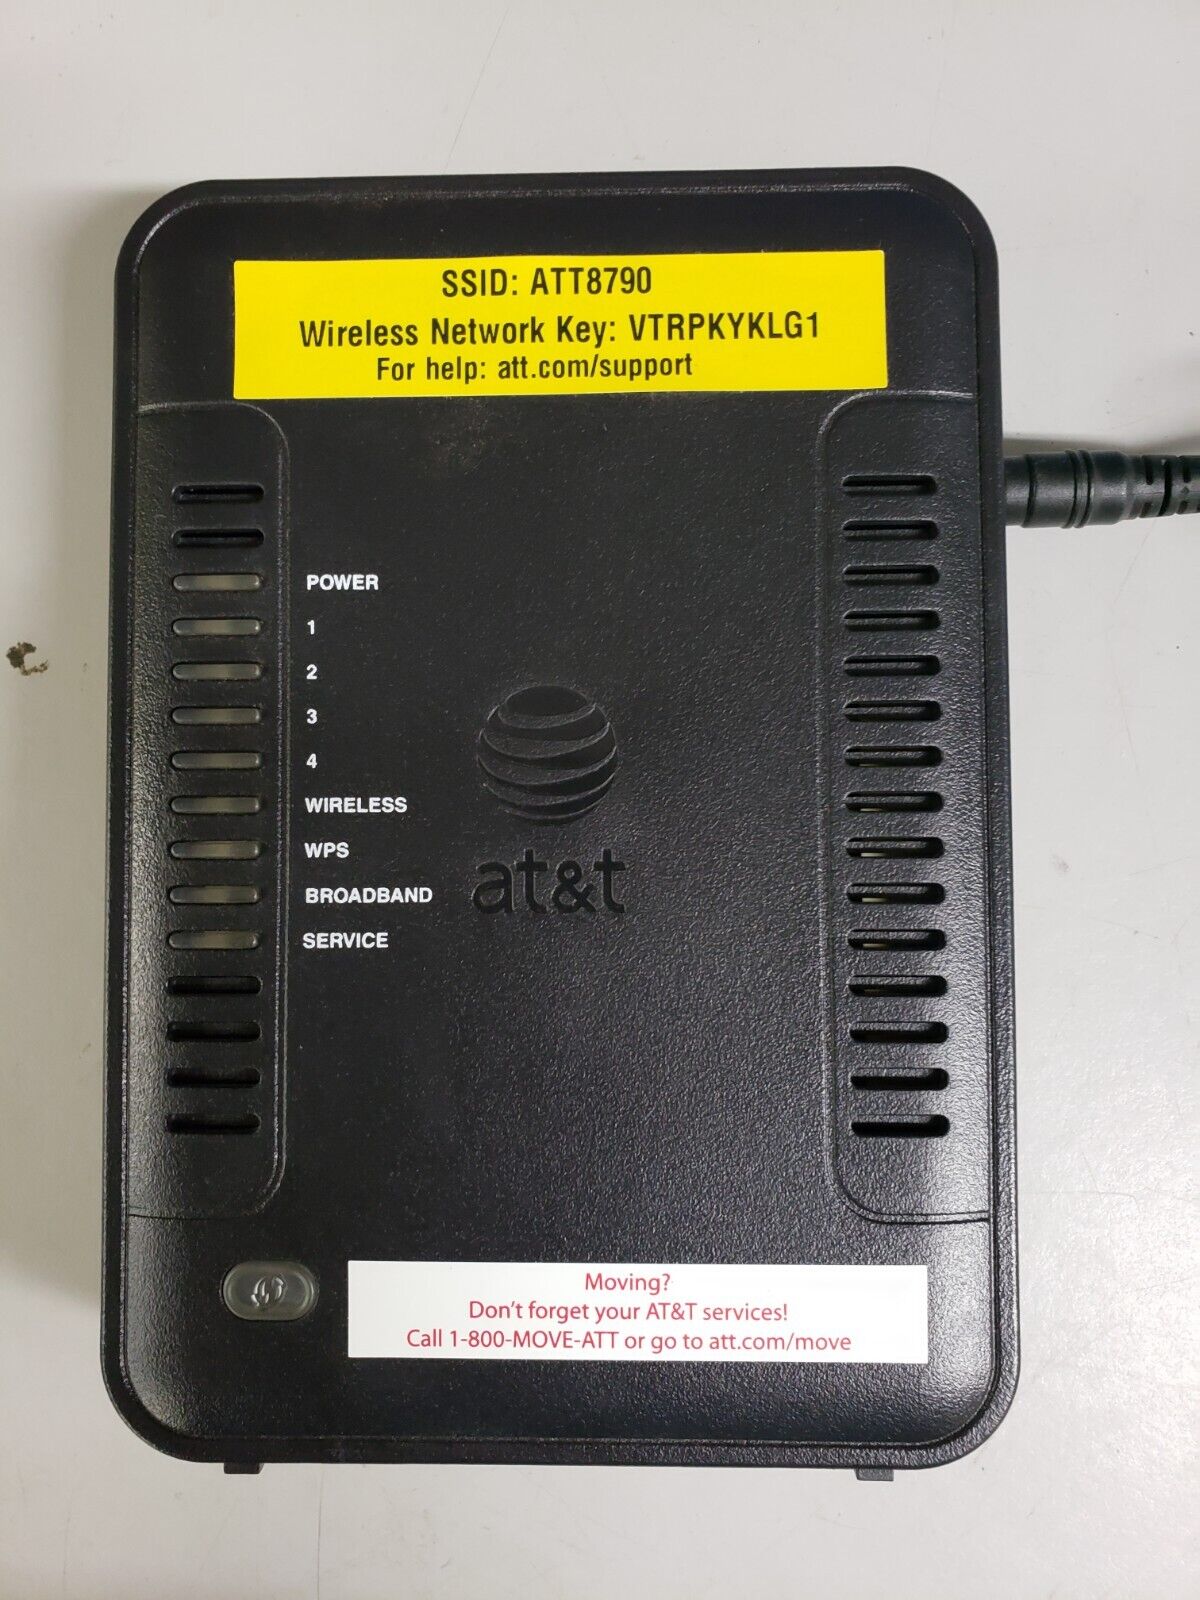 Netgear 7550 ADSL2+ Modem and Wireless Router AT&T B90-755025-15